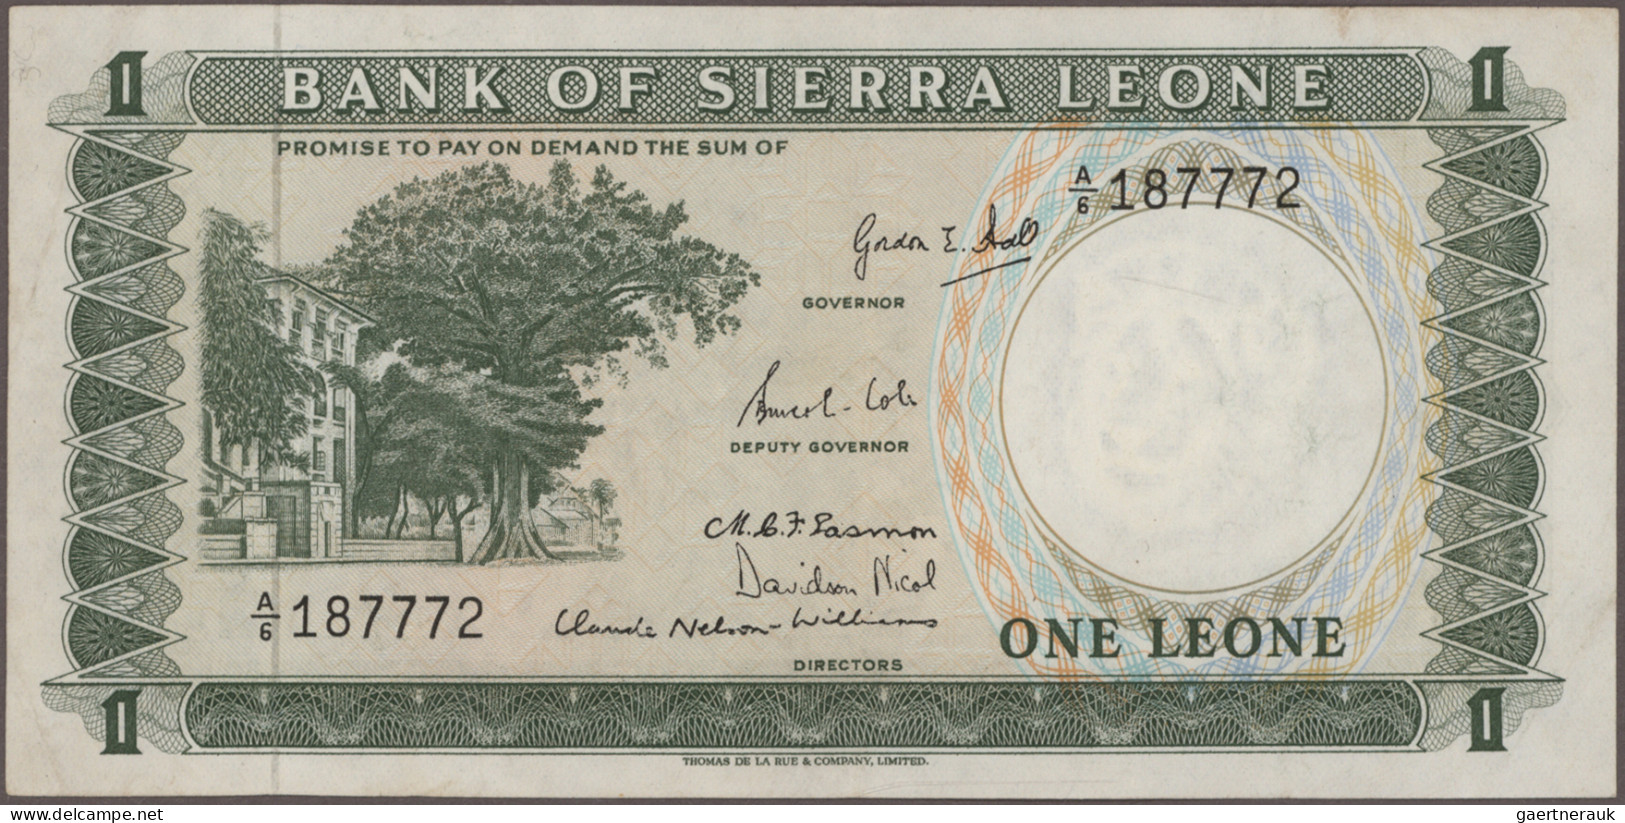 Sierra Leone: Bank of Sierra Leone, huge lot with 32 banknotes, series 1964-2010